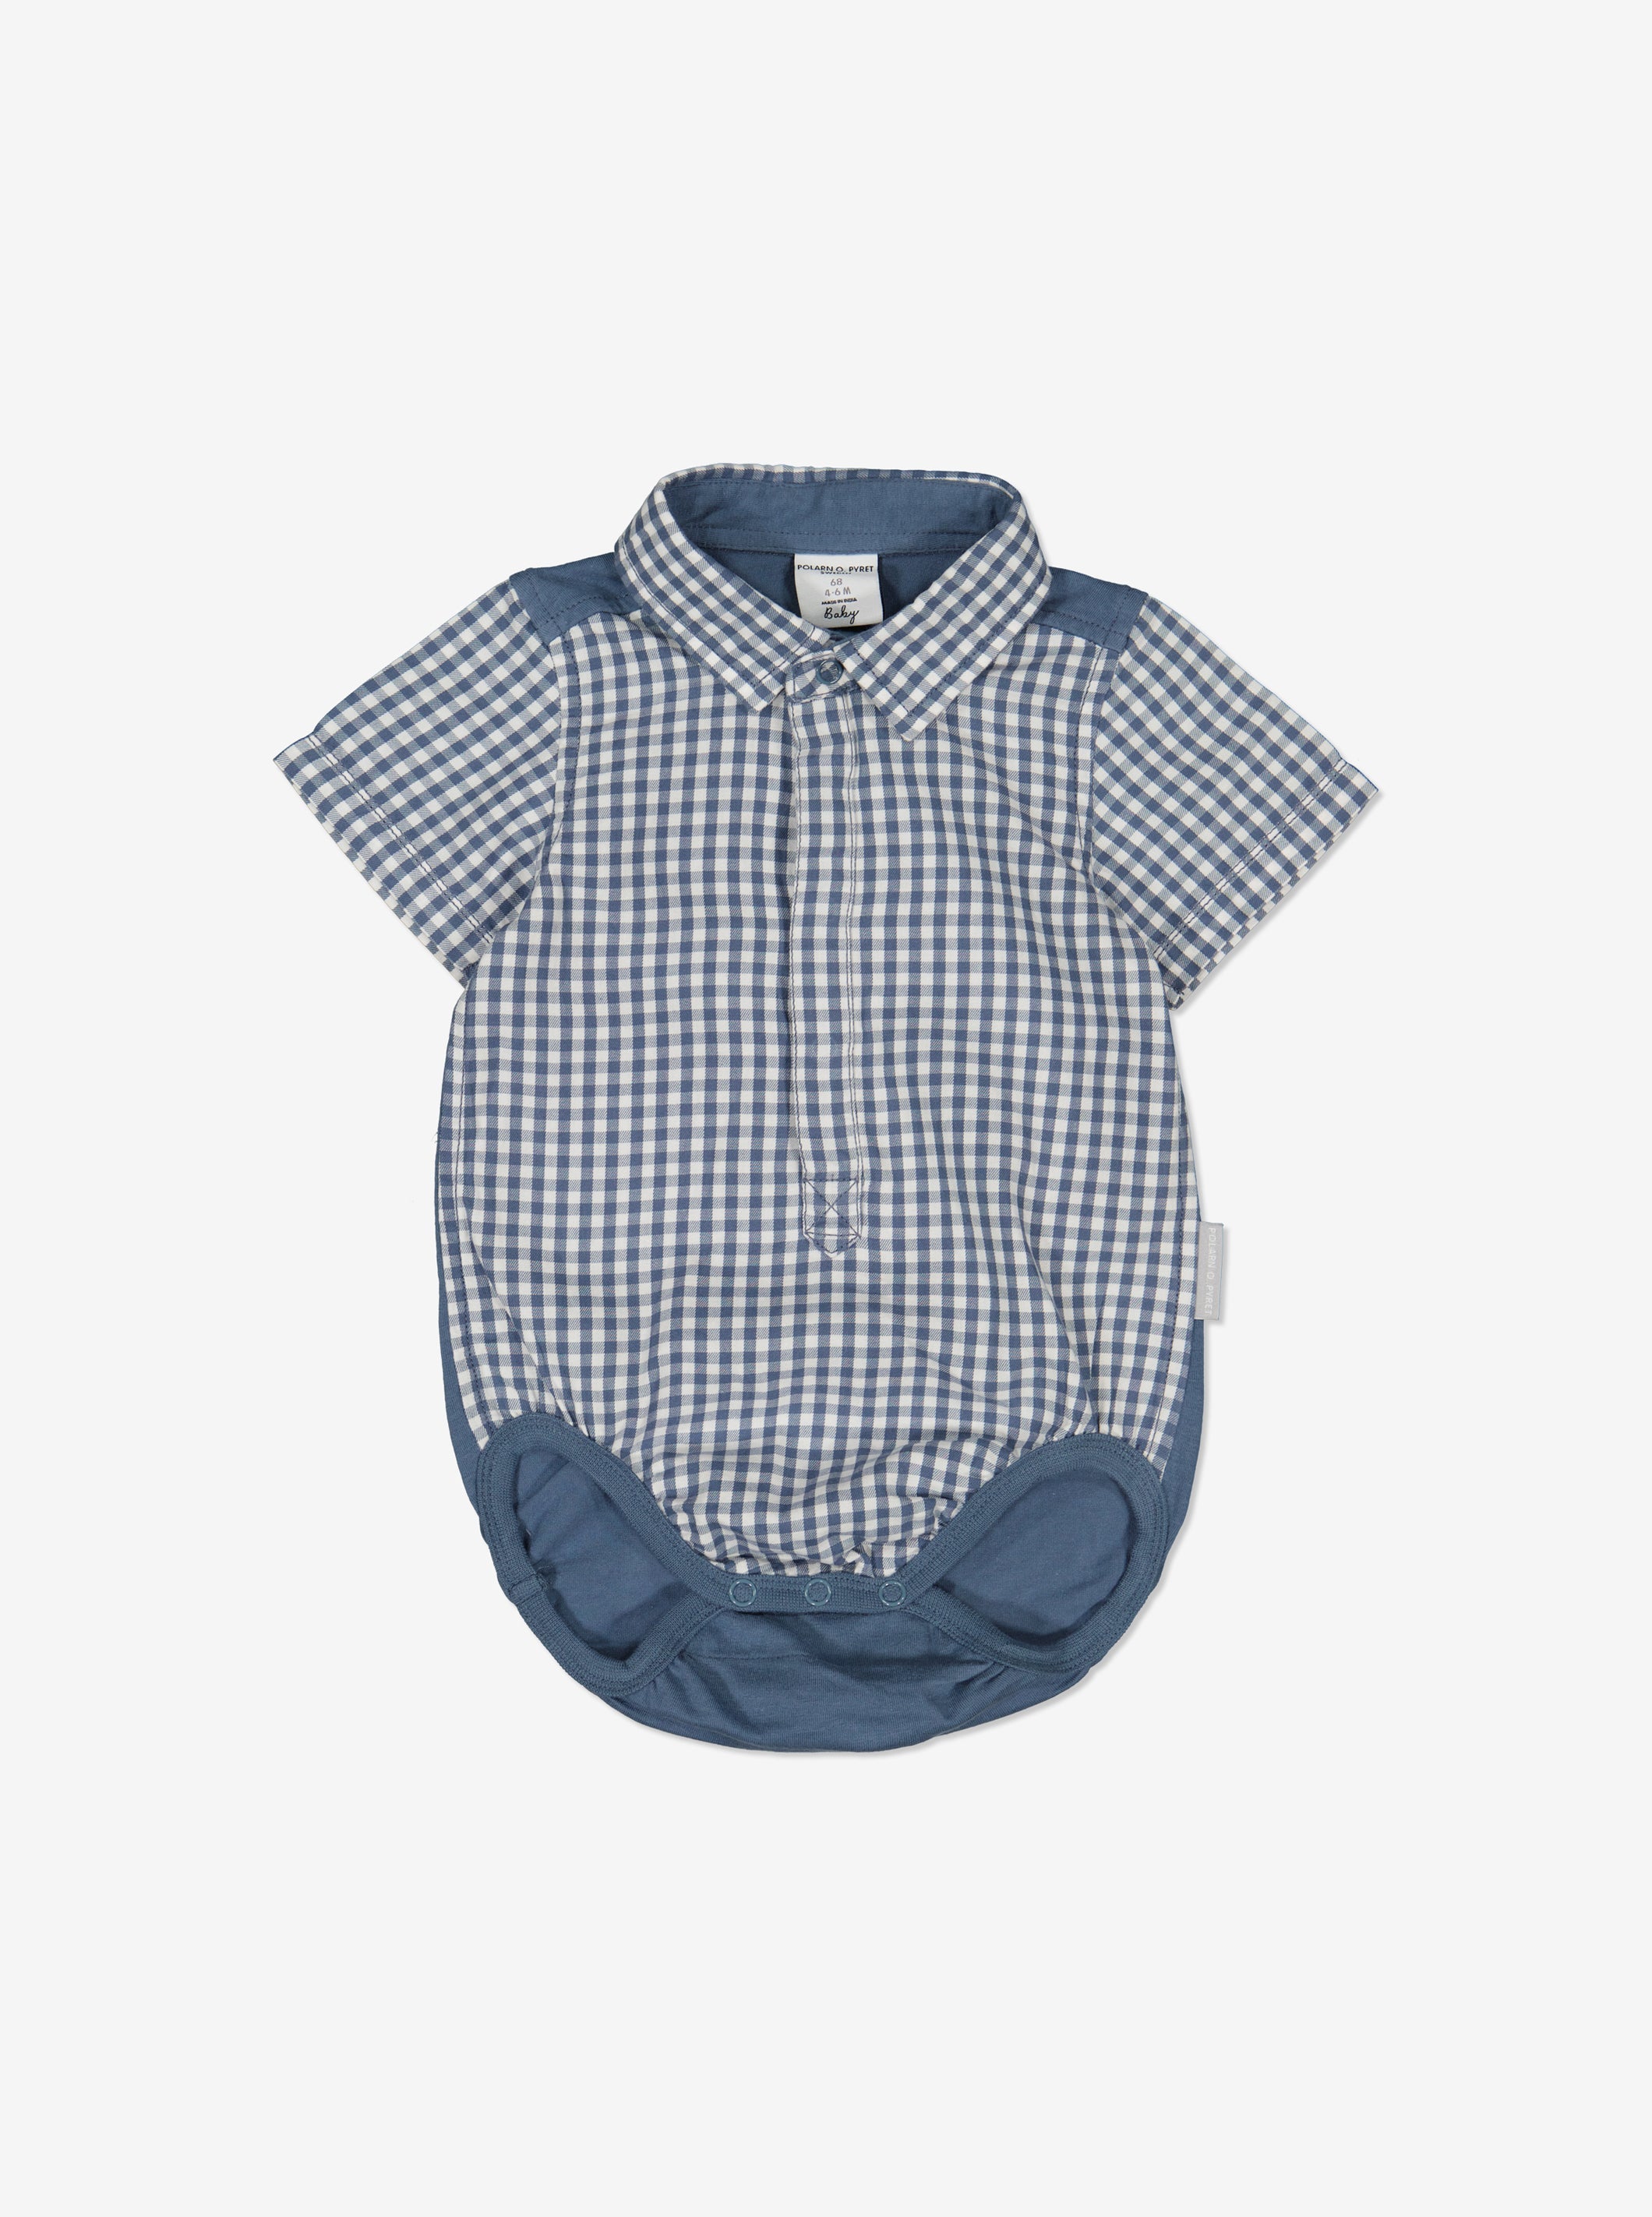 Smart Checked Babygrow Shirt